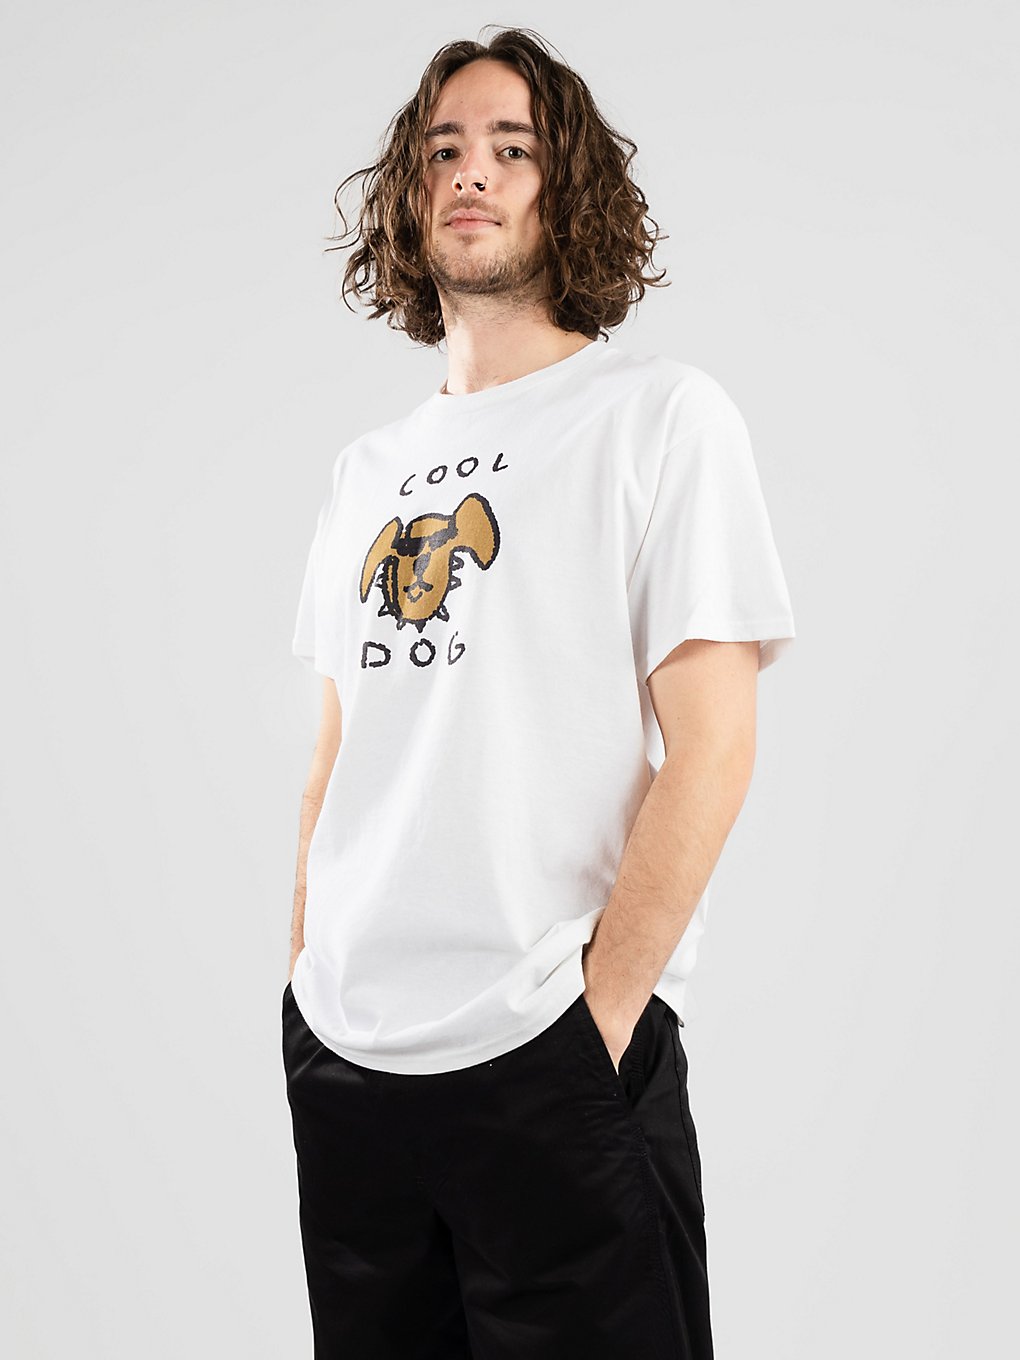 A.Lab Cool Dog T-Shirt white kaufen